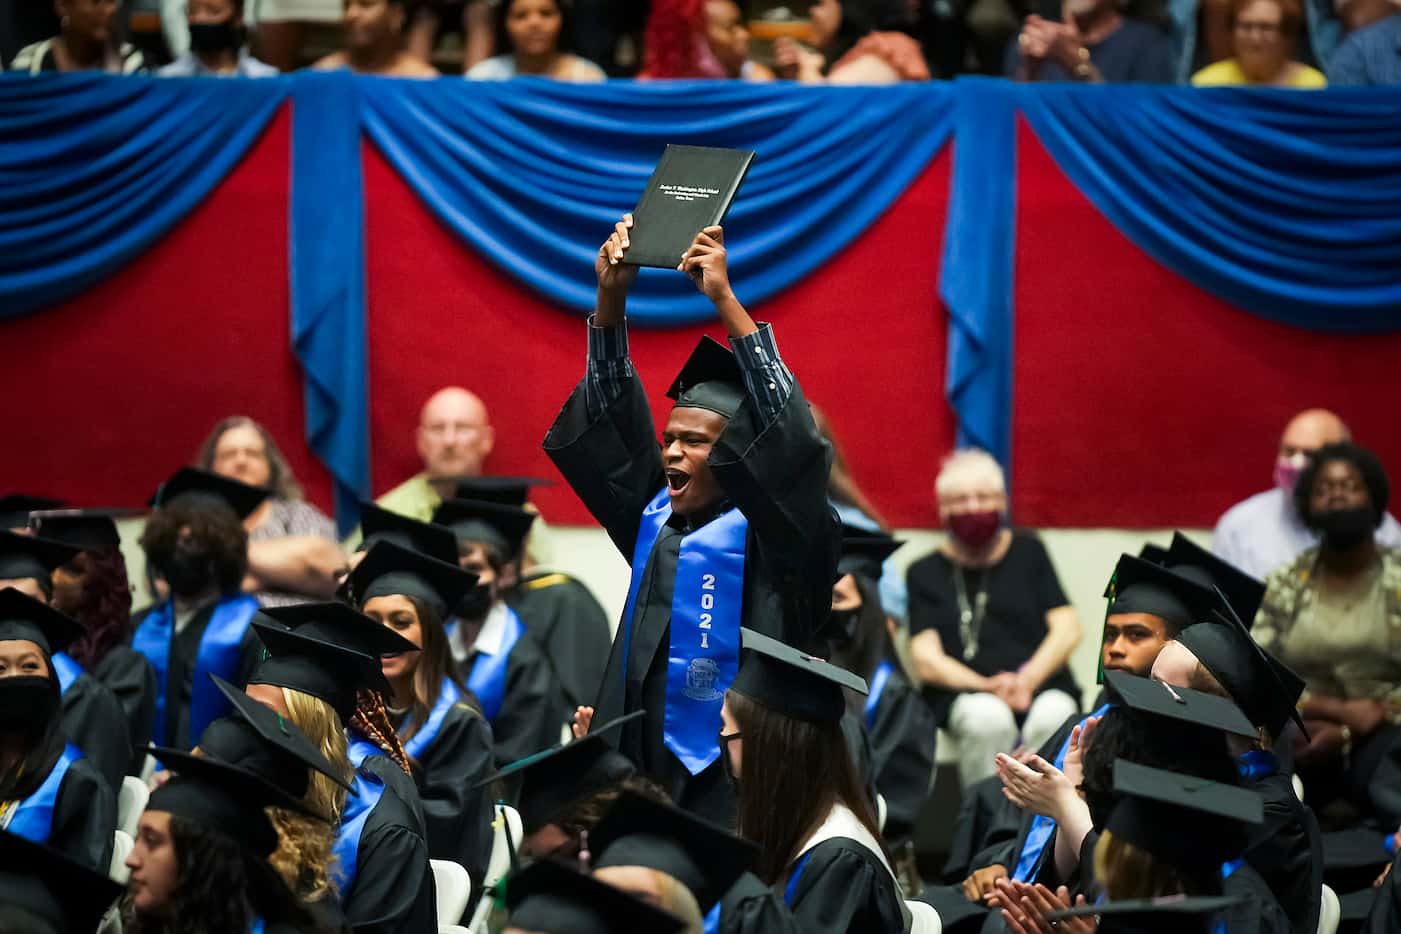 Graduate Kadar Price raises his diploma in celebration during commencement ceremonies for...